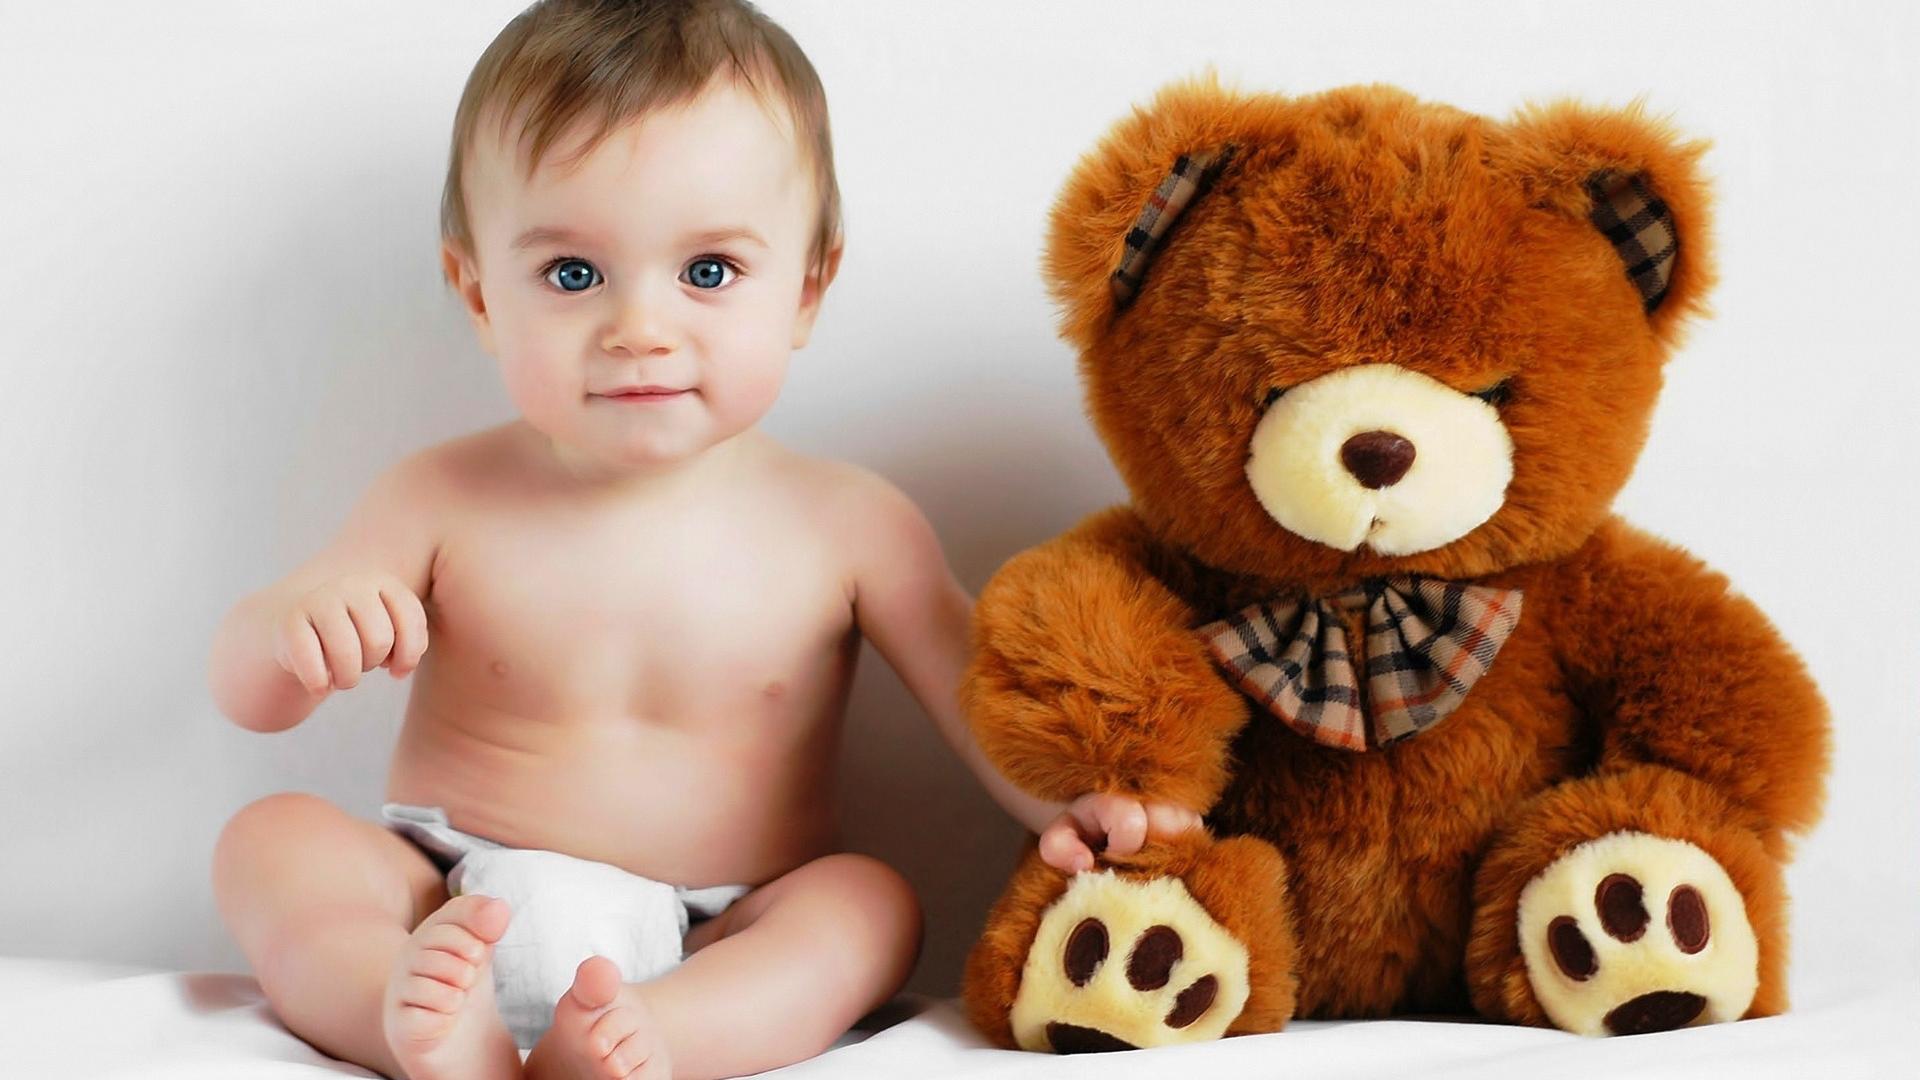 Cute Baby Boy With Teddy Bear - Cute Baby Baby Background - HD Wallpaper 